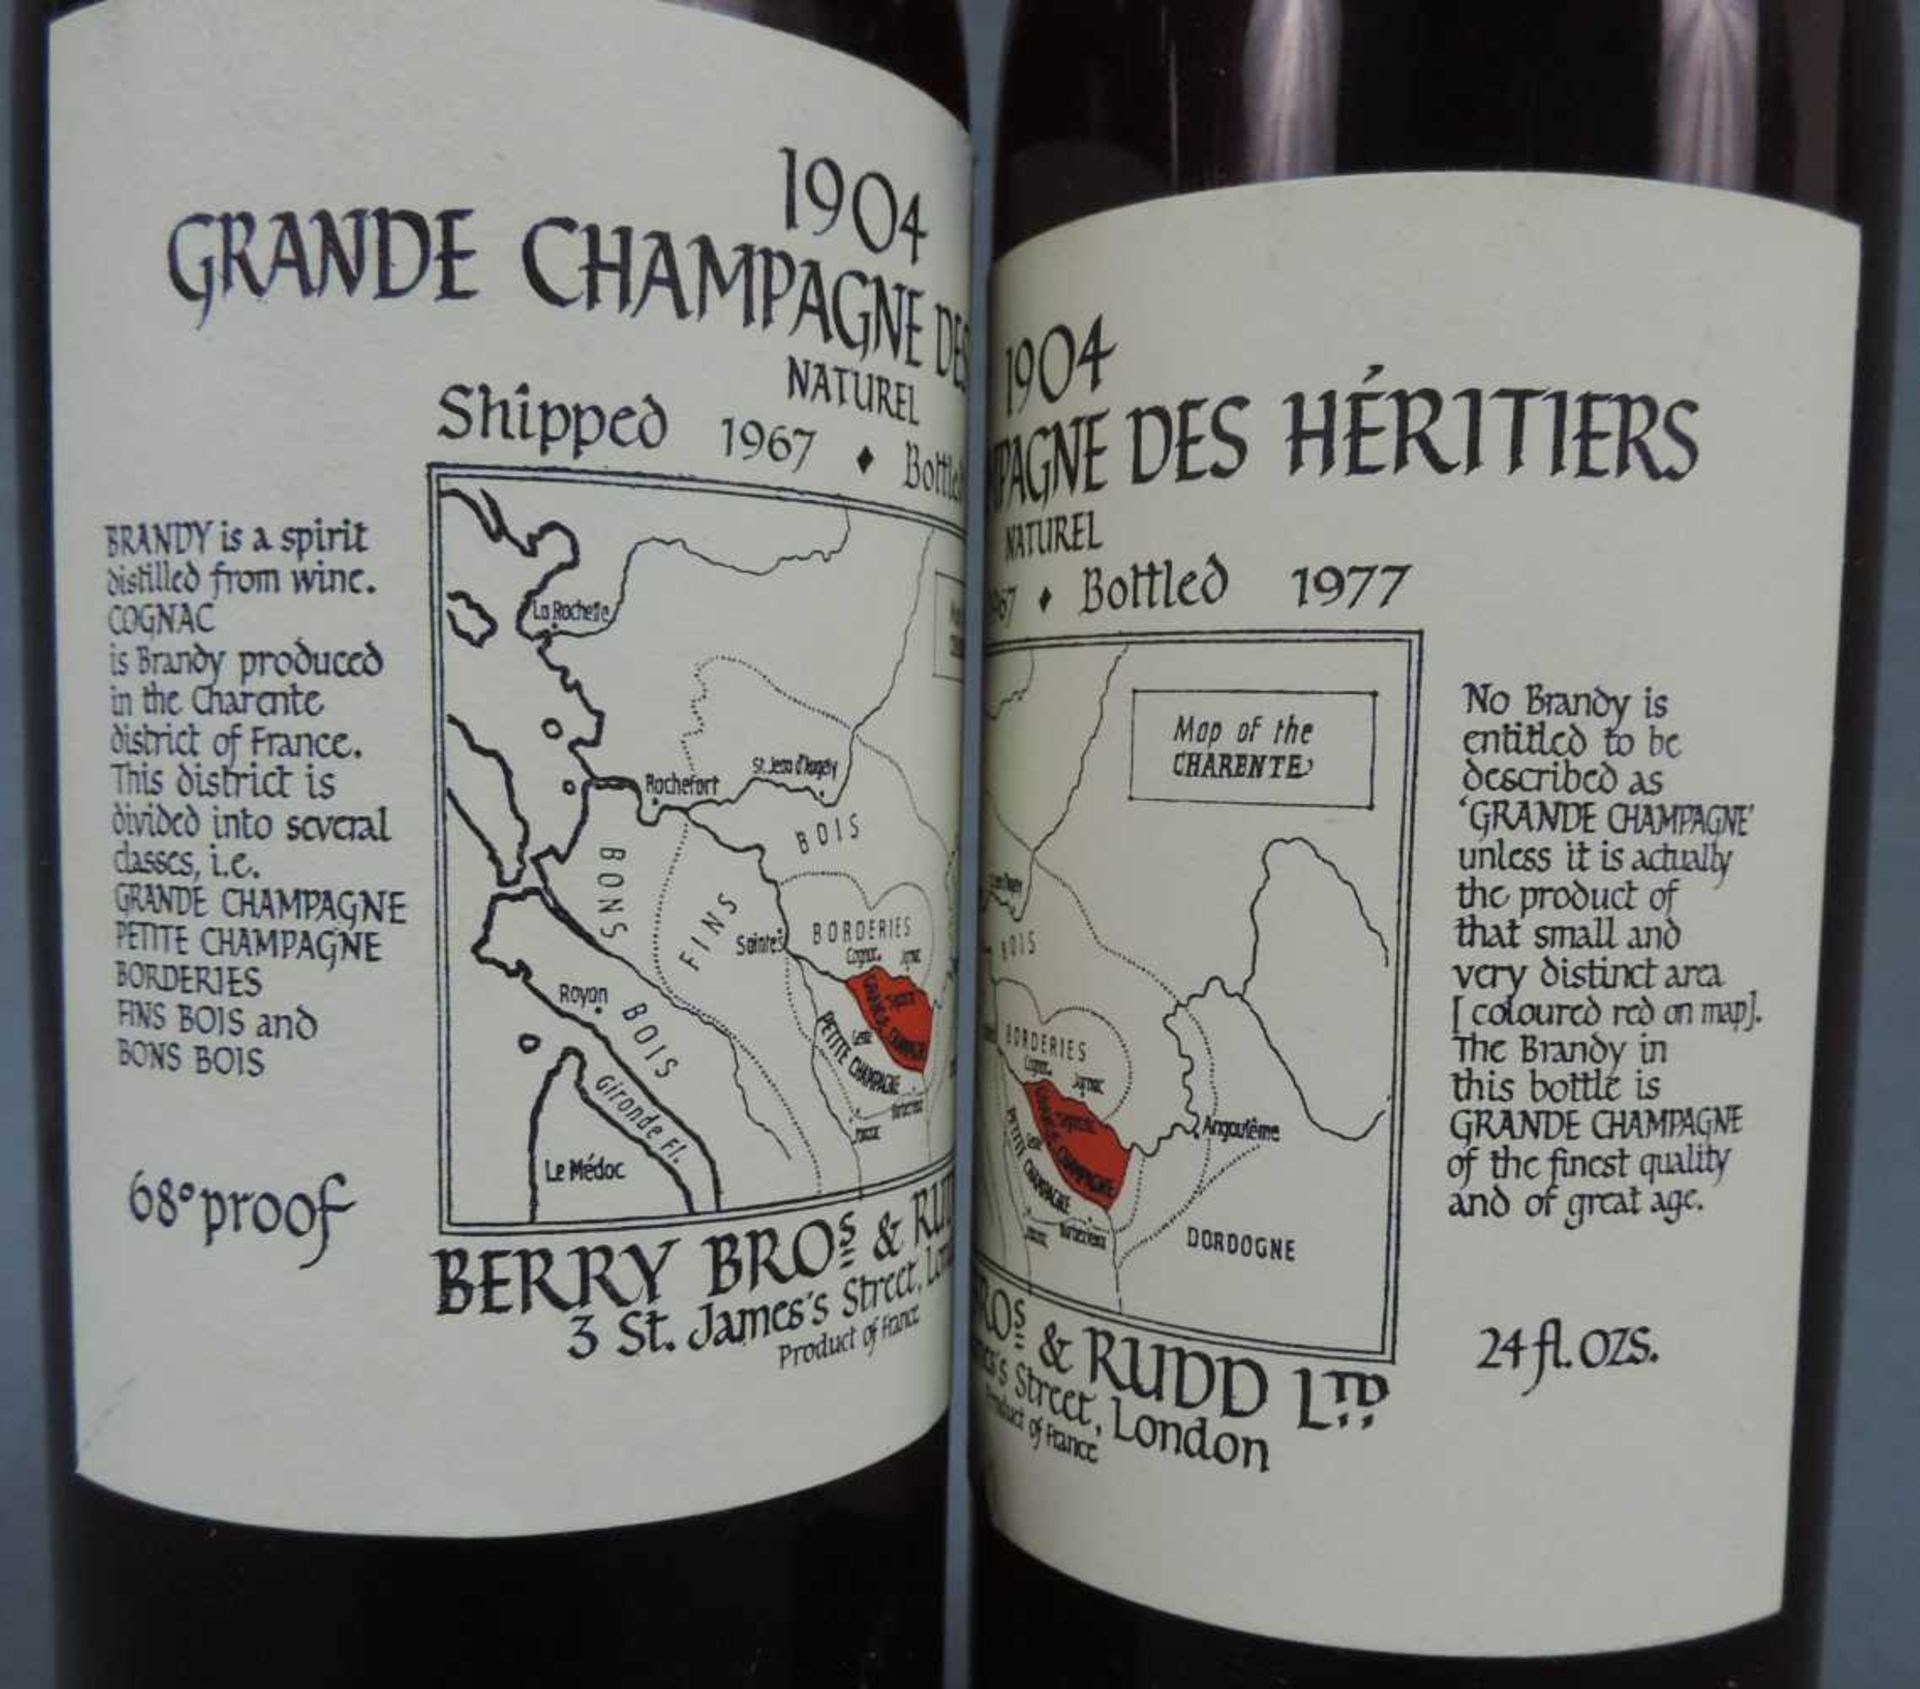 BERRY BROS 1904 GRANDE CHAMPAGNE DES HERITIERS COGNAC. 24fl.ozs. 68°proof. 2 ganze Flaschen. BERRY - Image 2 of 5